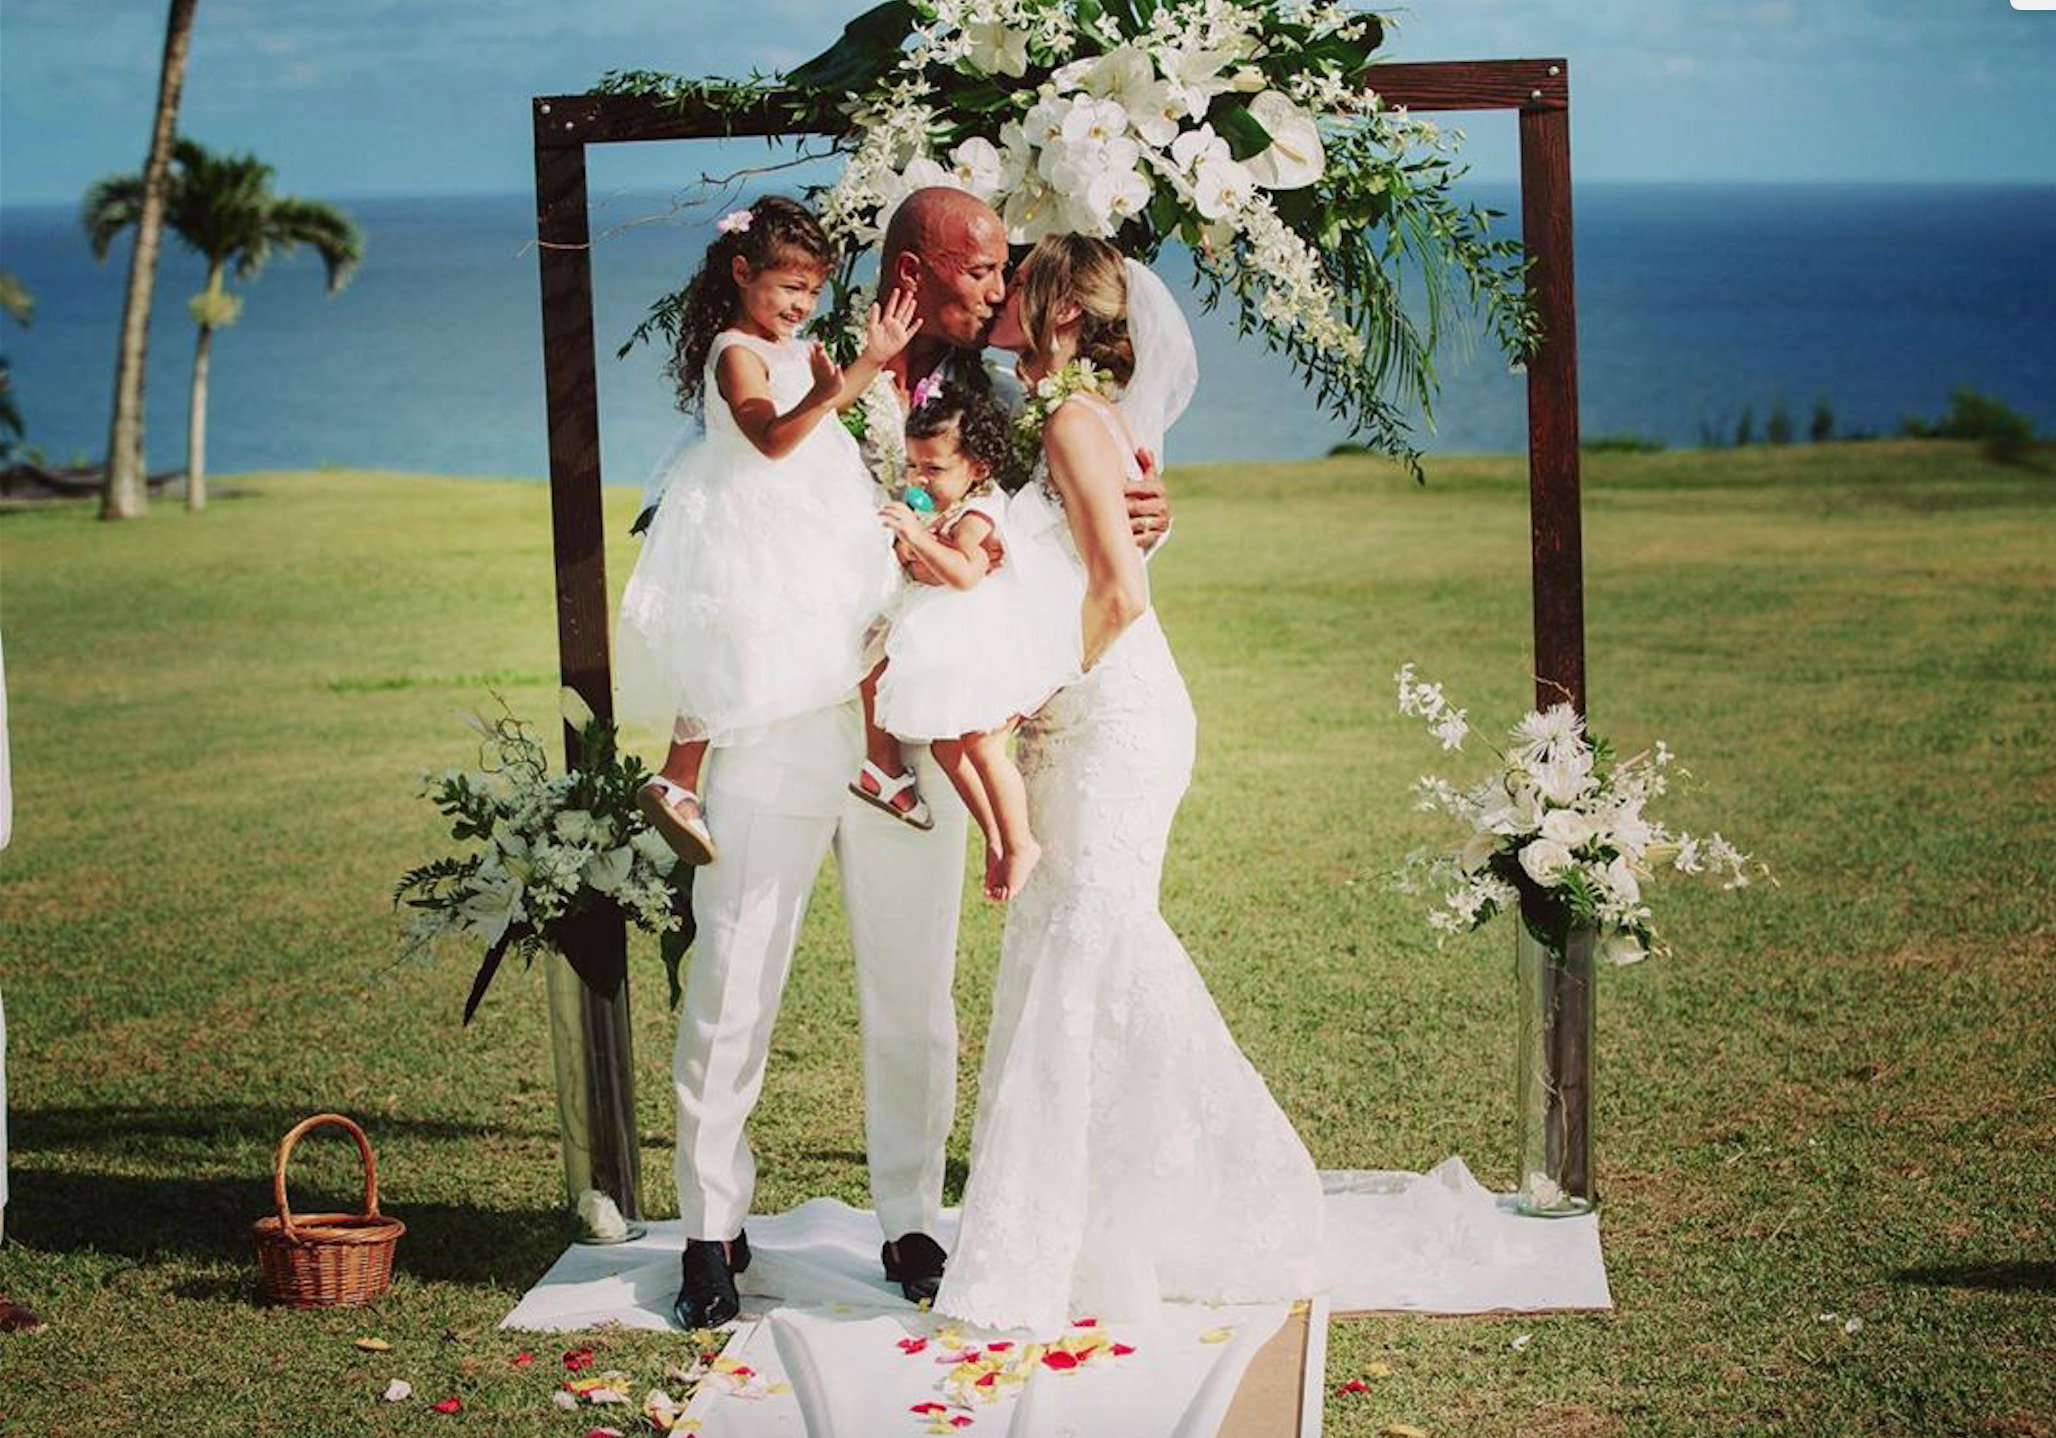 Casamento de Dwayne Johnson &amp; Lauren Hashian | Foto via IG @therock